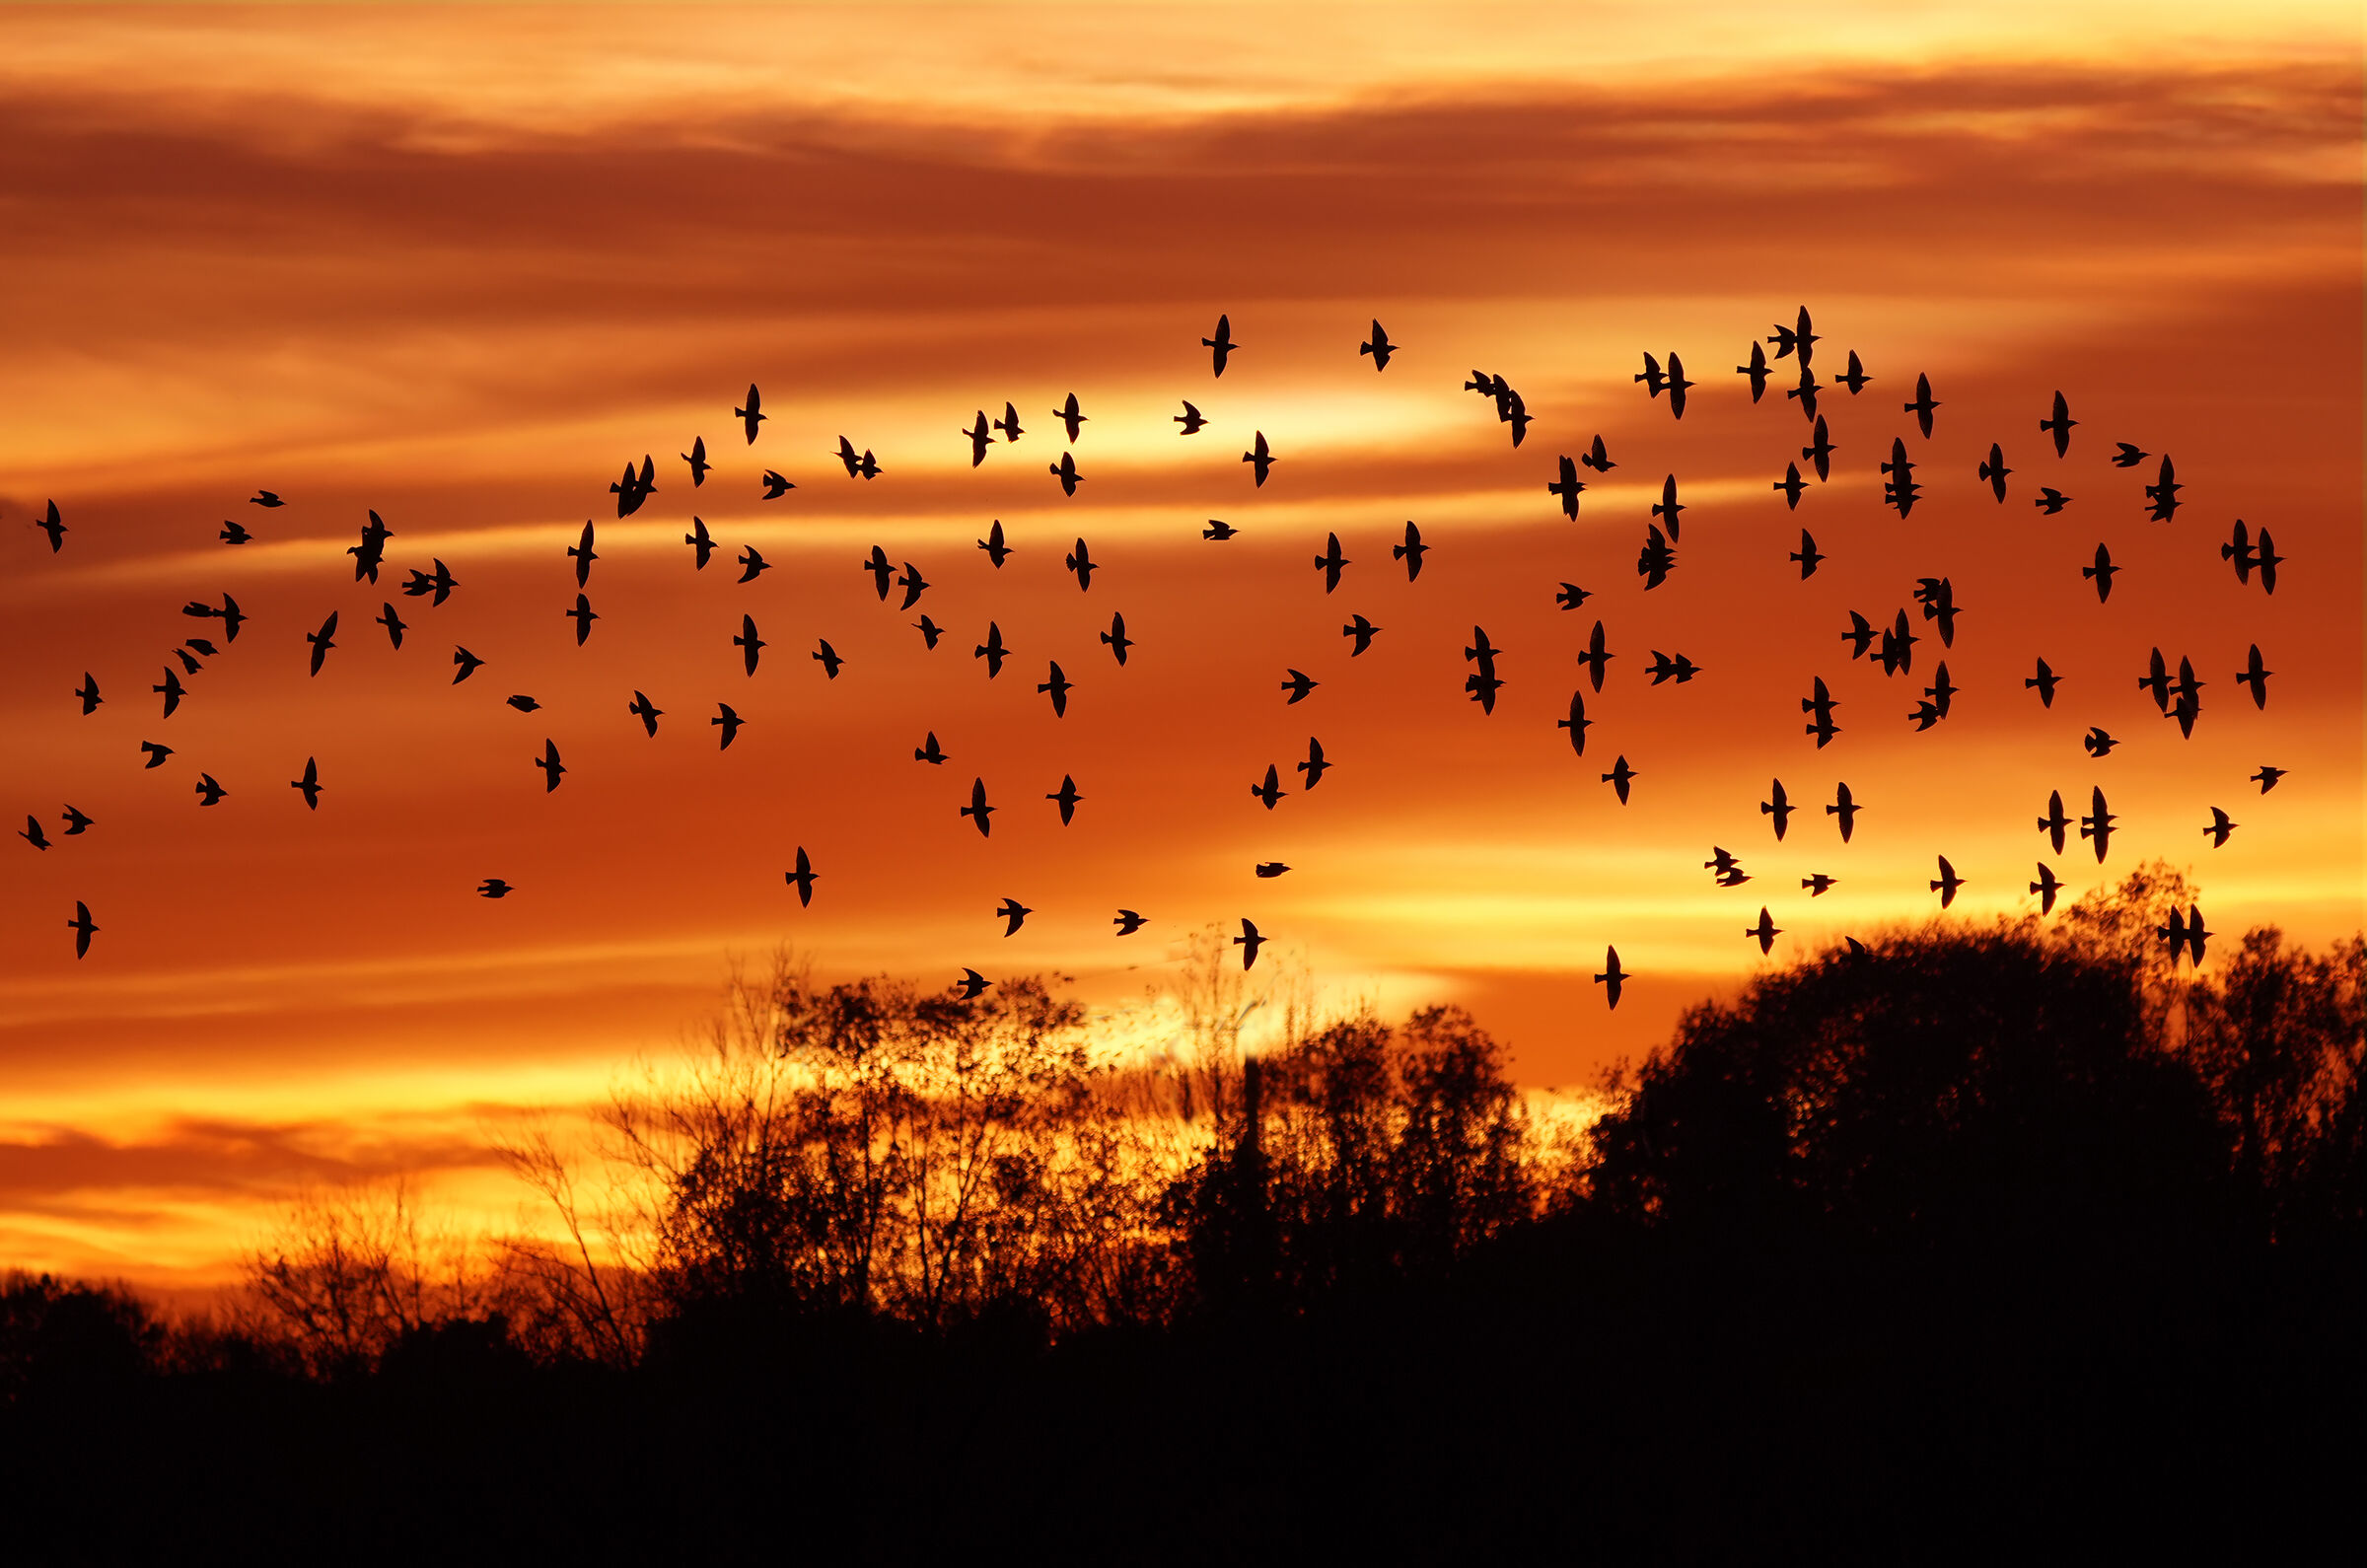 Starlings at sunset...